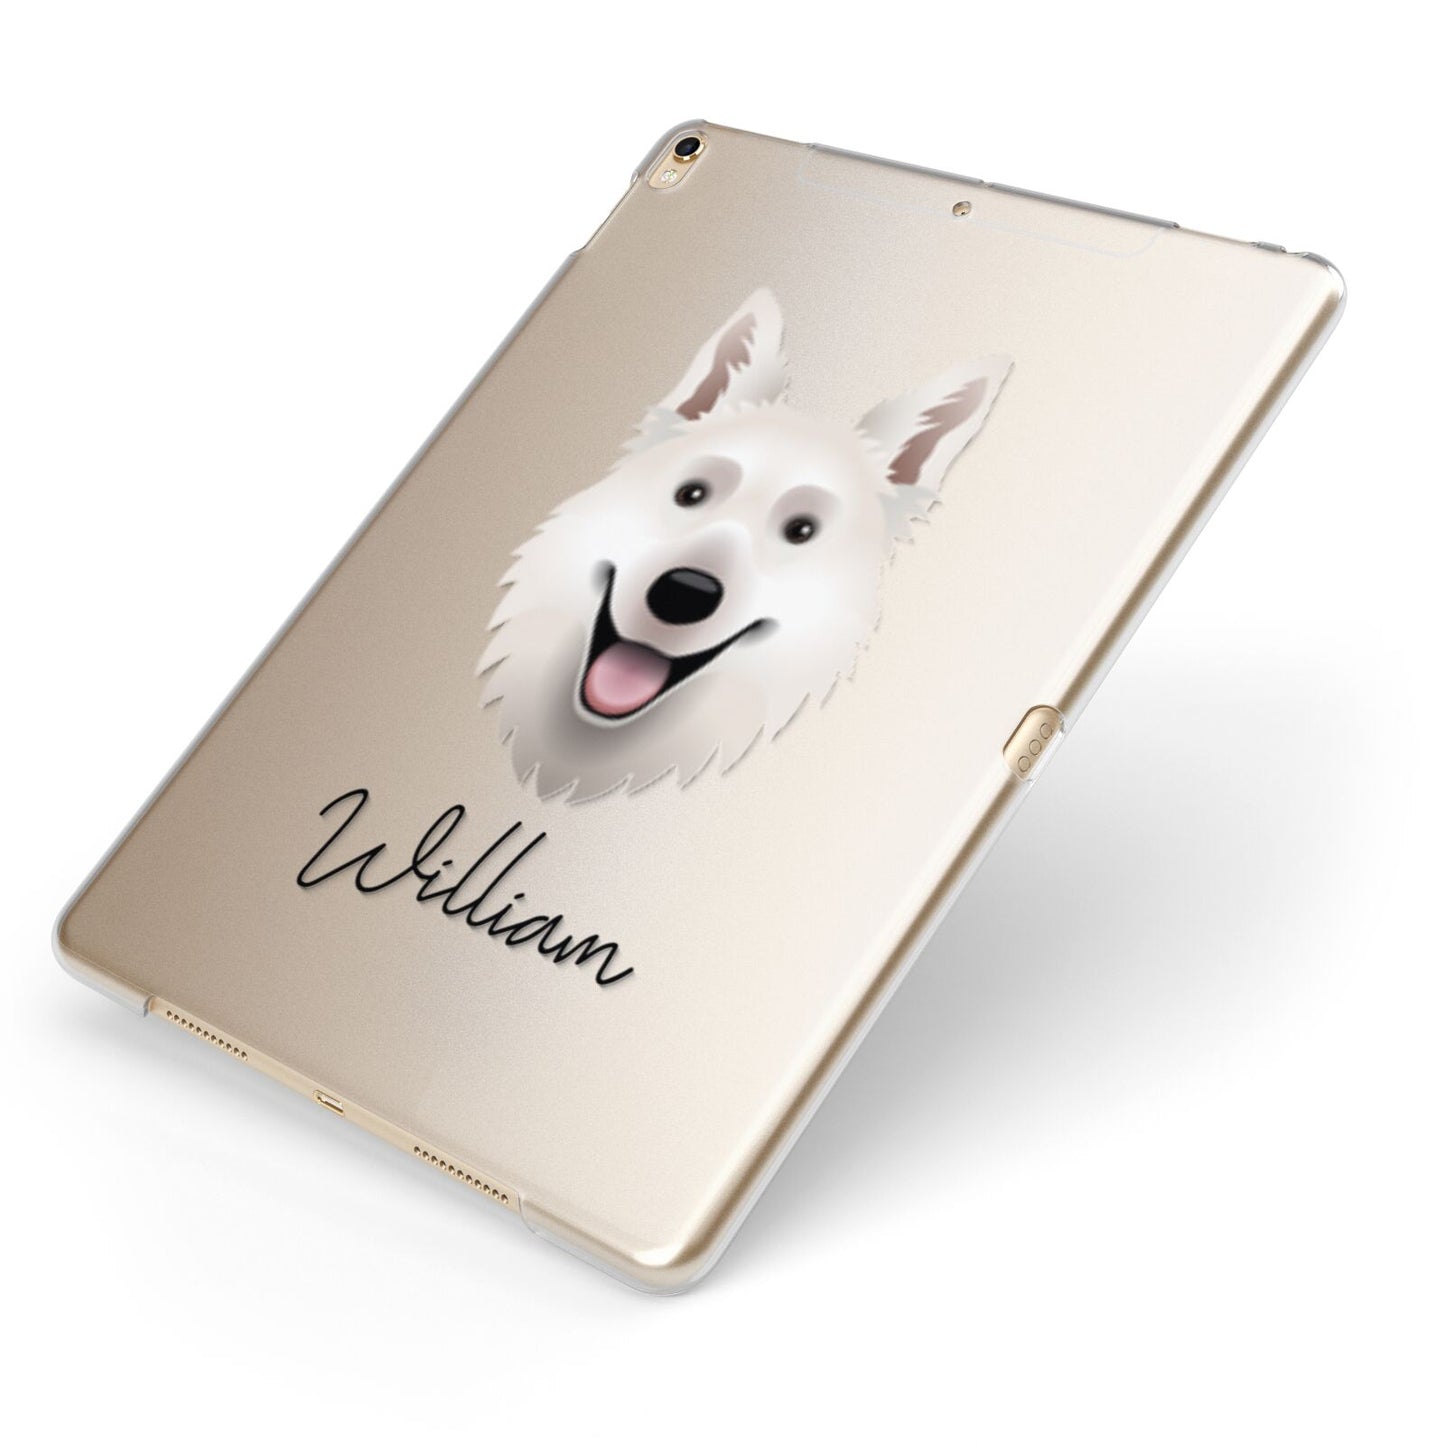 White Swiss Shepherd Dog Personalised Apple iPad Case on Gold iPad Side View